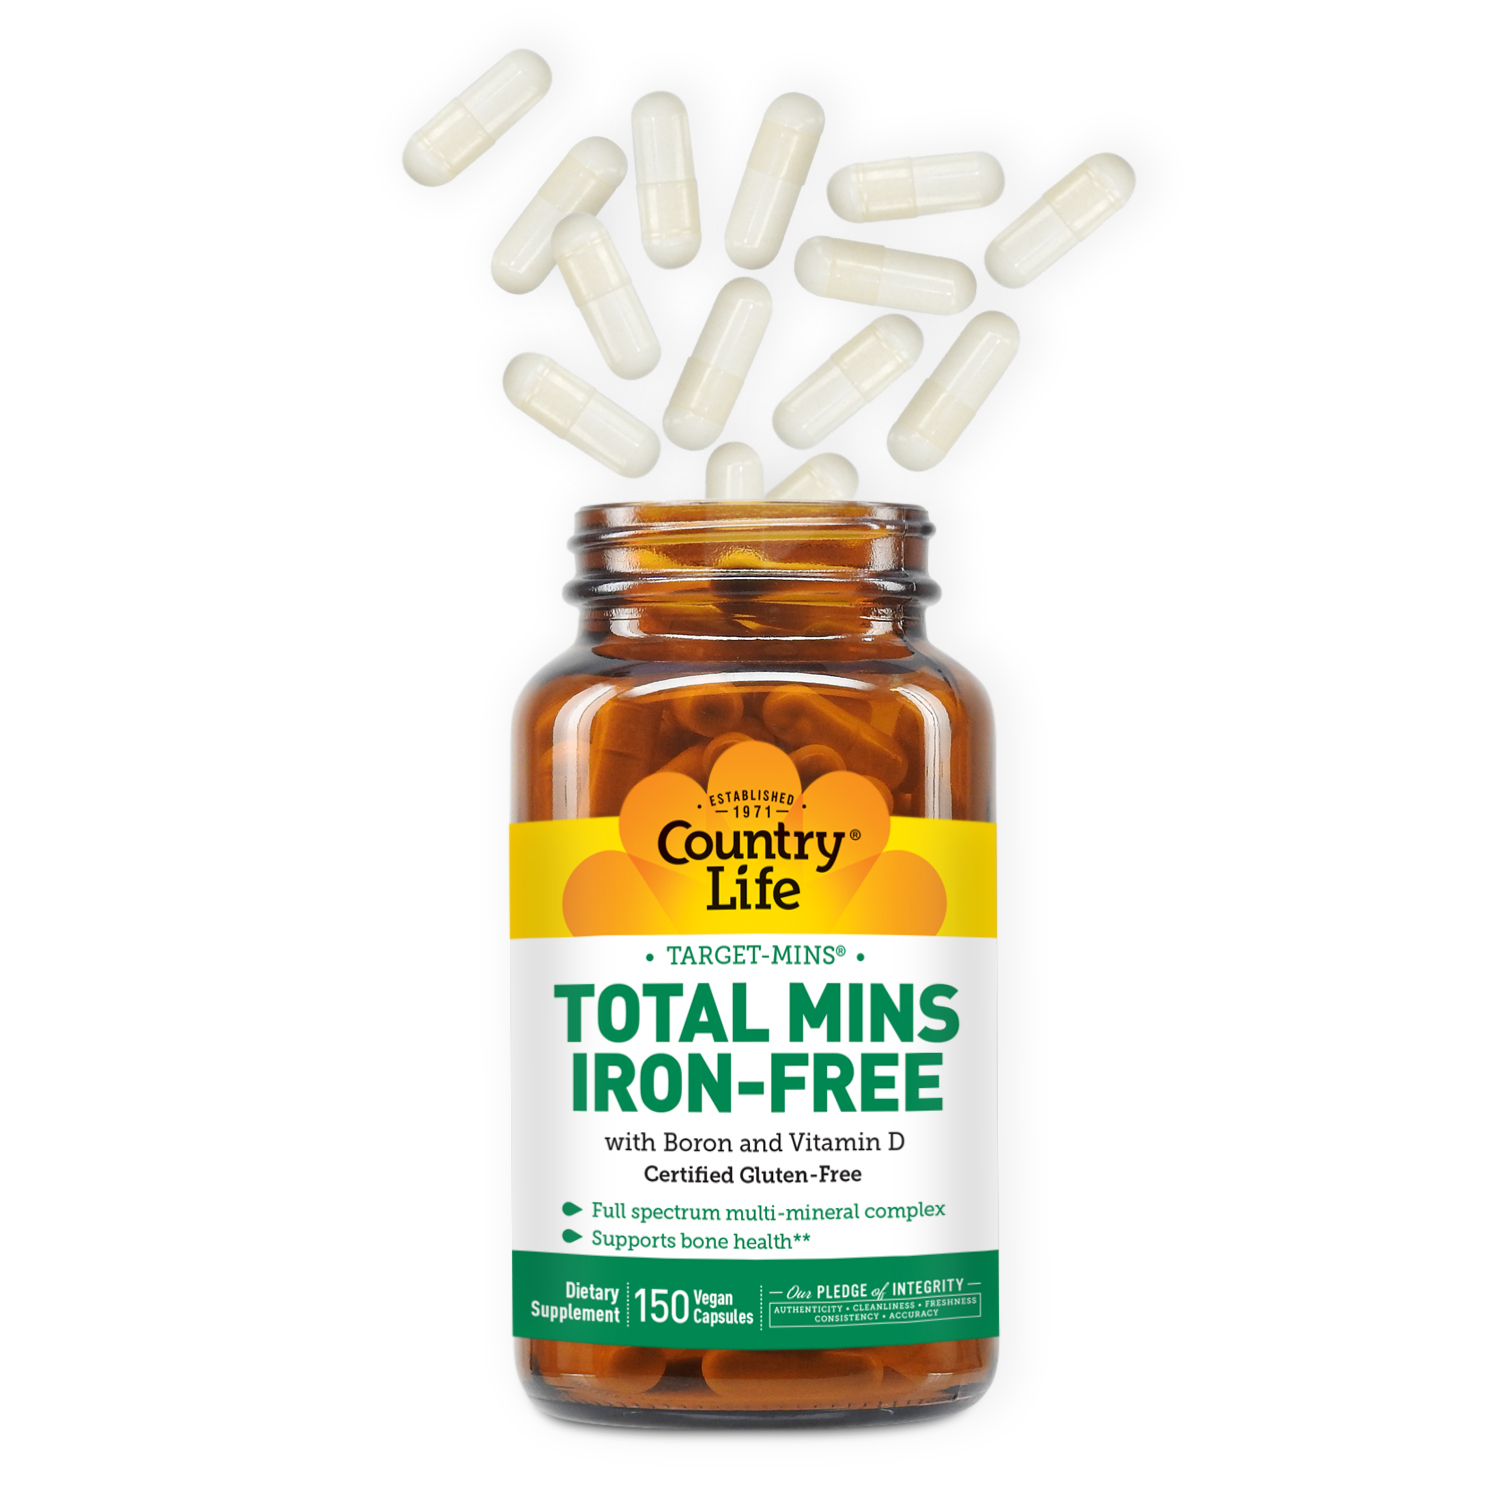 Total Mins Iron-Free (150 capsules) - Country Life Vitamins